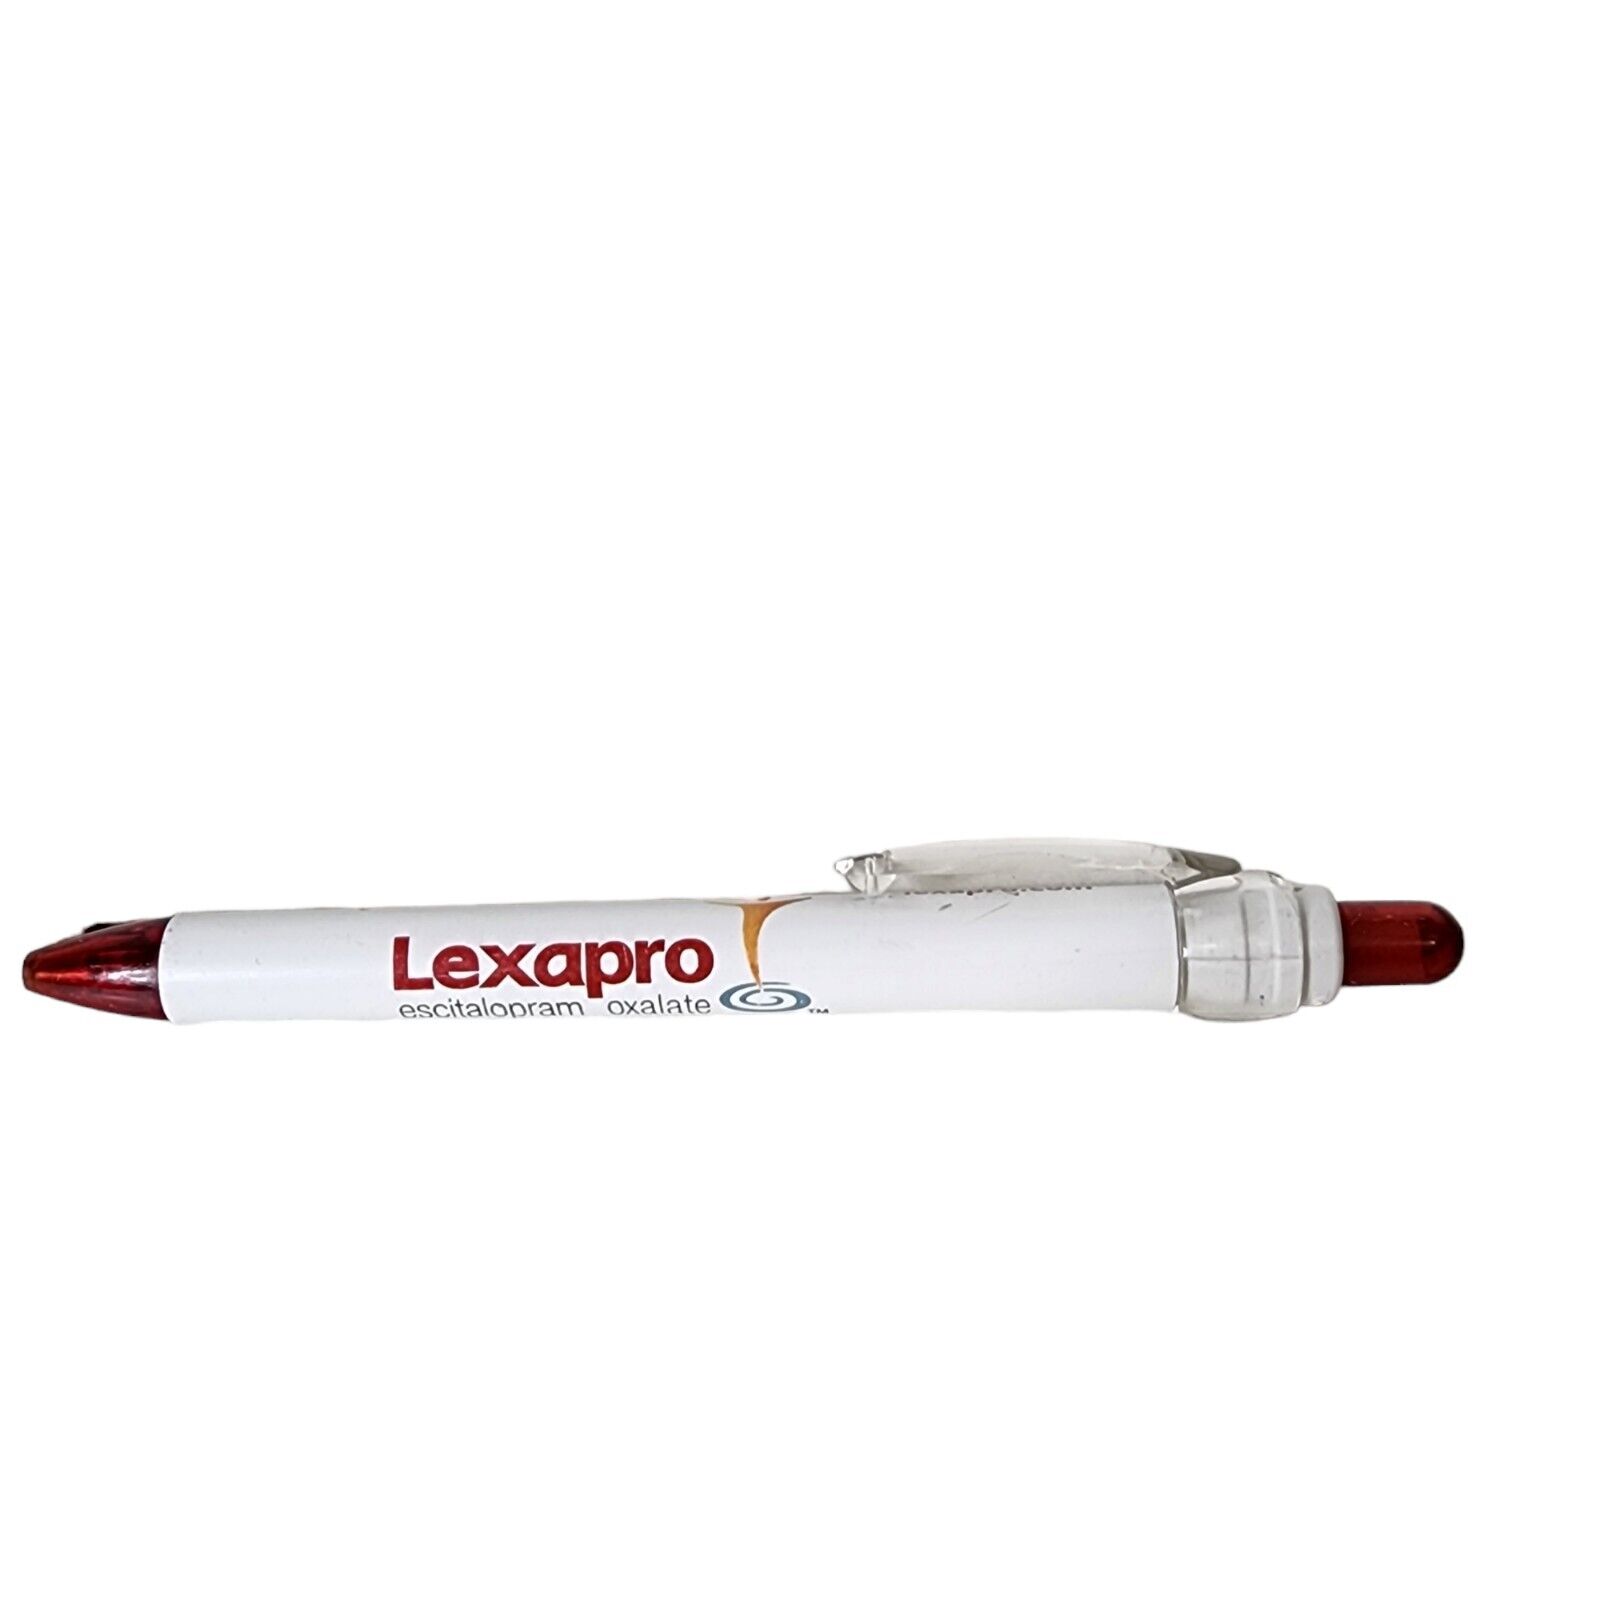 Lexapro Pen Escitalopram Oxalate Pharmaceutical Drug Rep Pharma Advertising